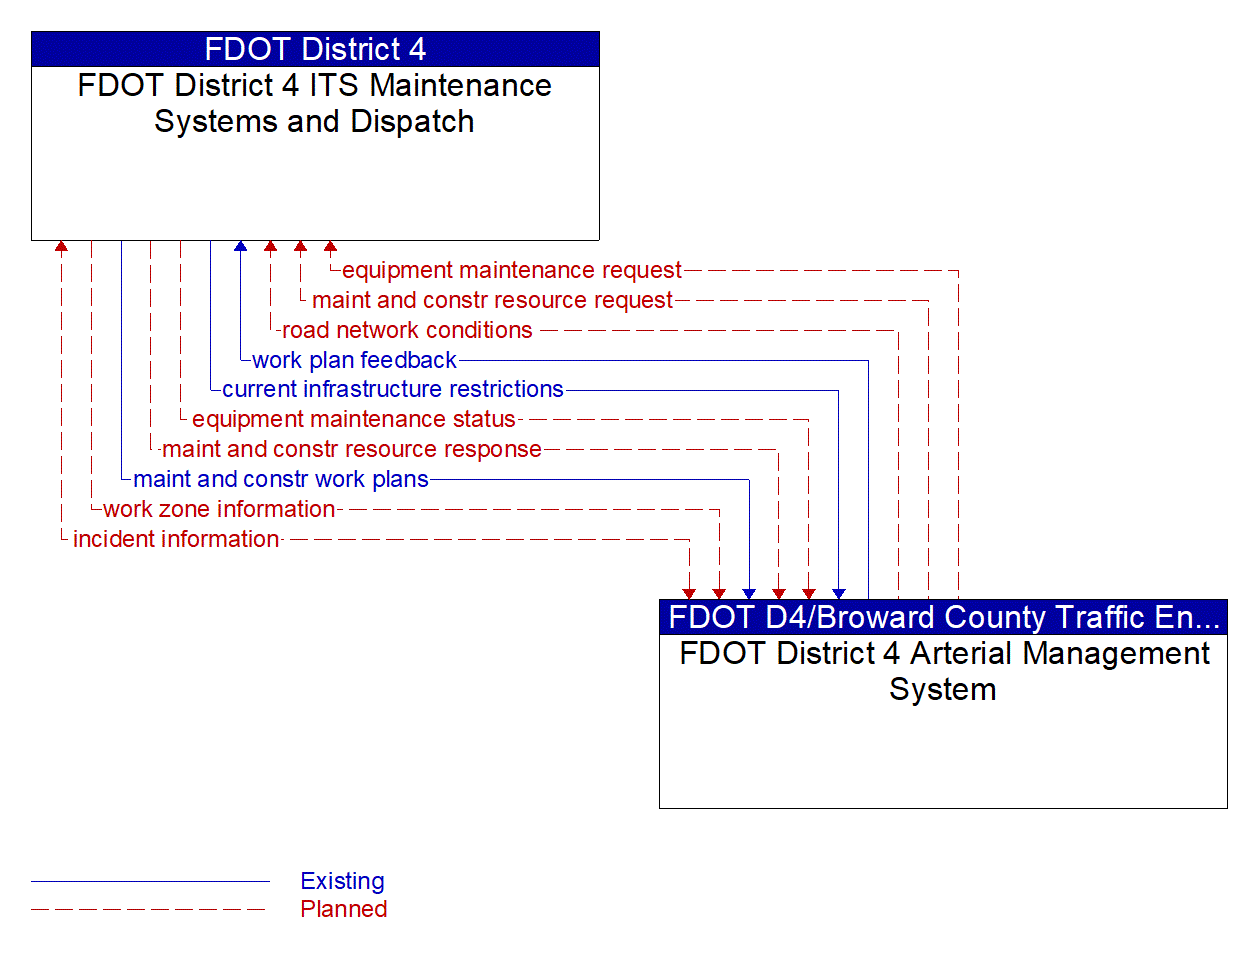 Architecture Flow Diagram: FDOT District 4 Arterial Management System <--> FDOT District 4 ITS Maintenance Systems and Dispatch